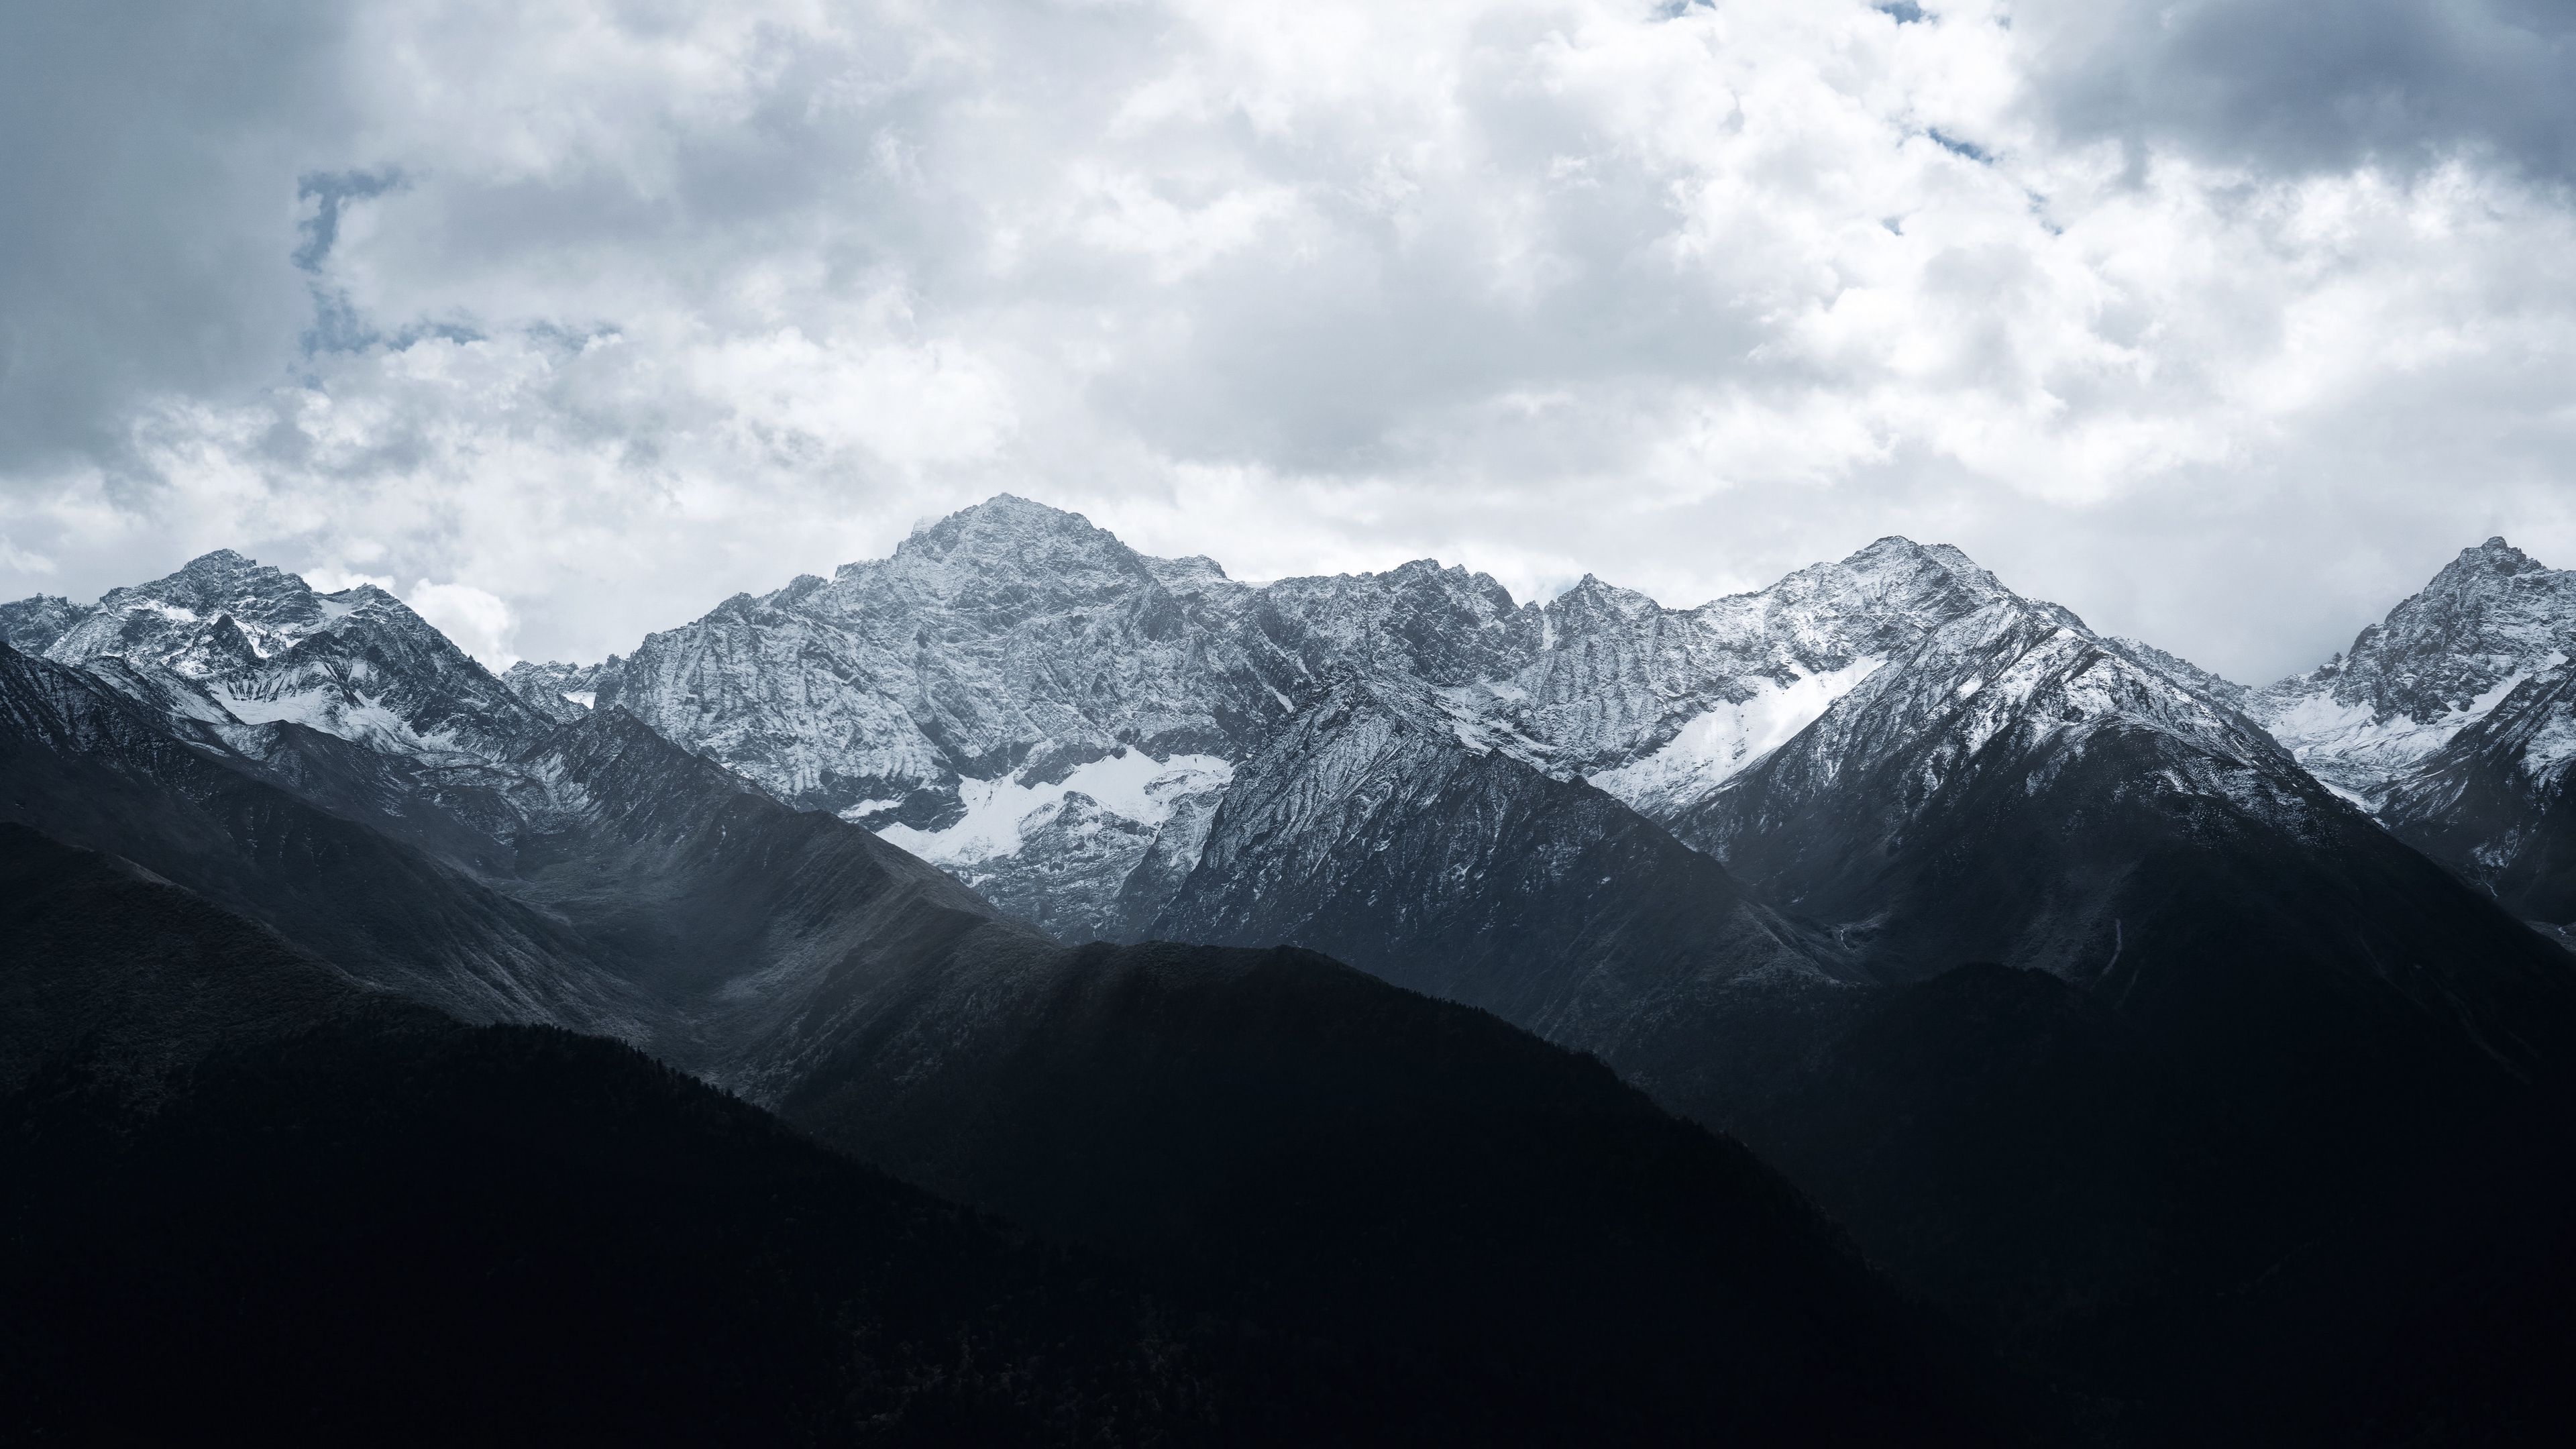 Download wallpaper 3840x2160 mountains, mountain range, peaks, clouds, nature 4k uhd 16:9 HD background